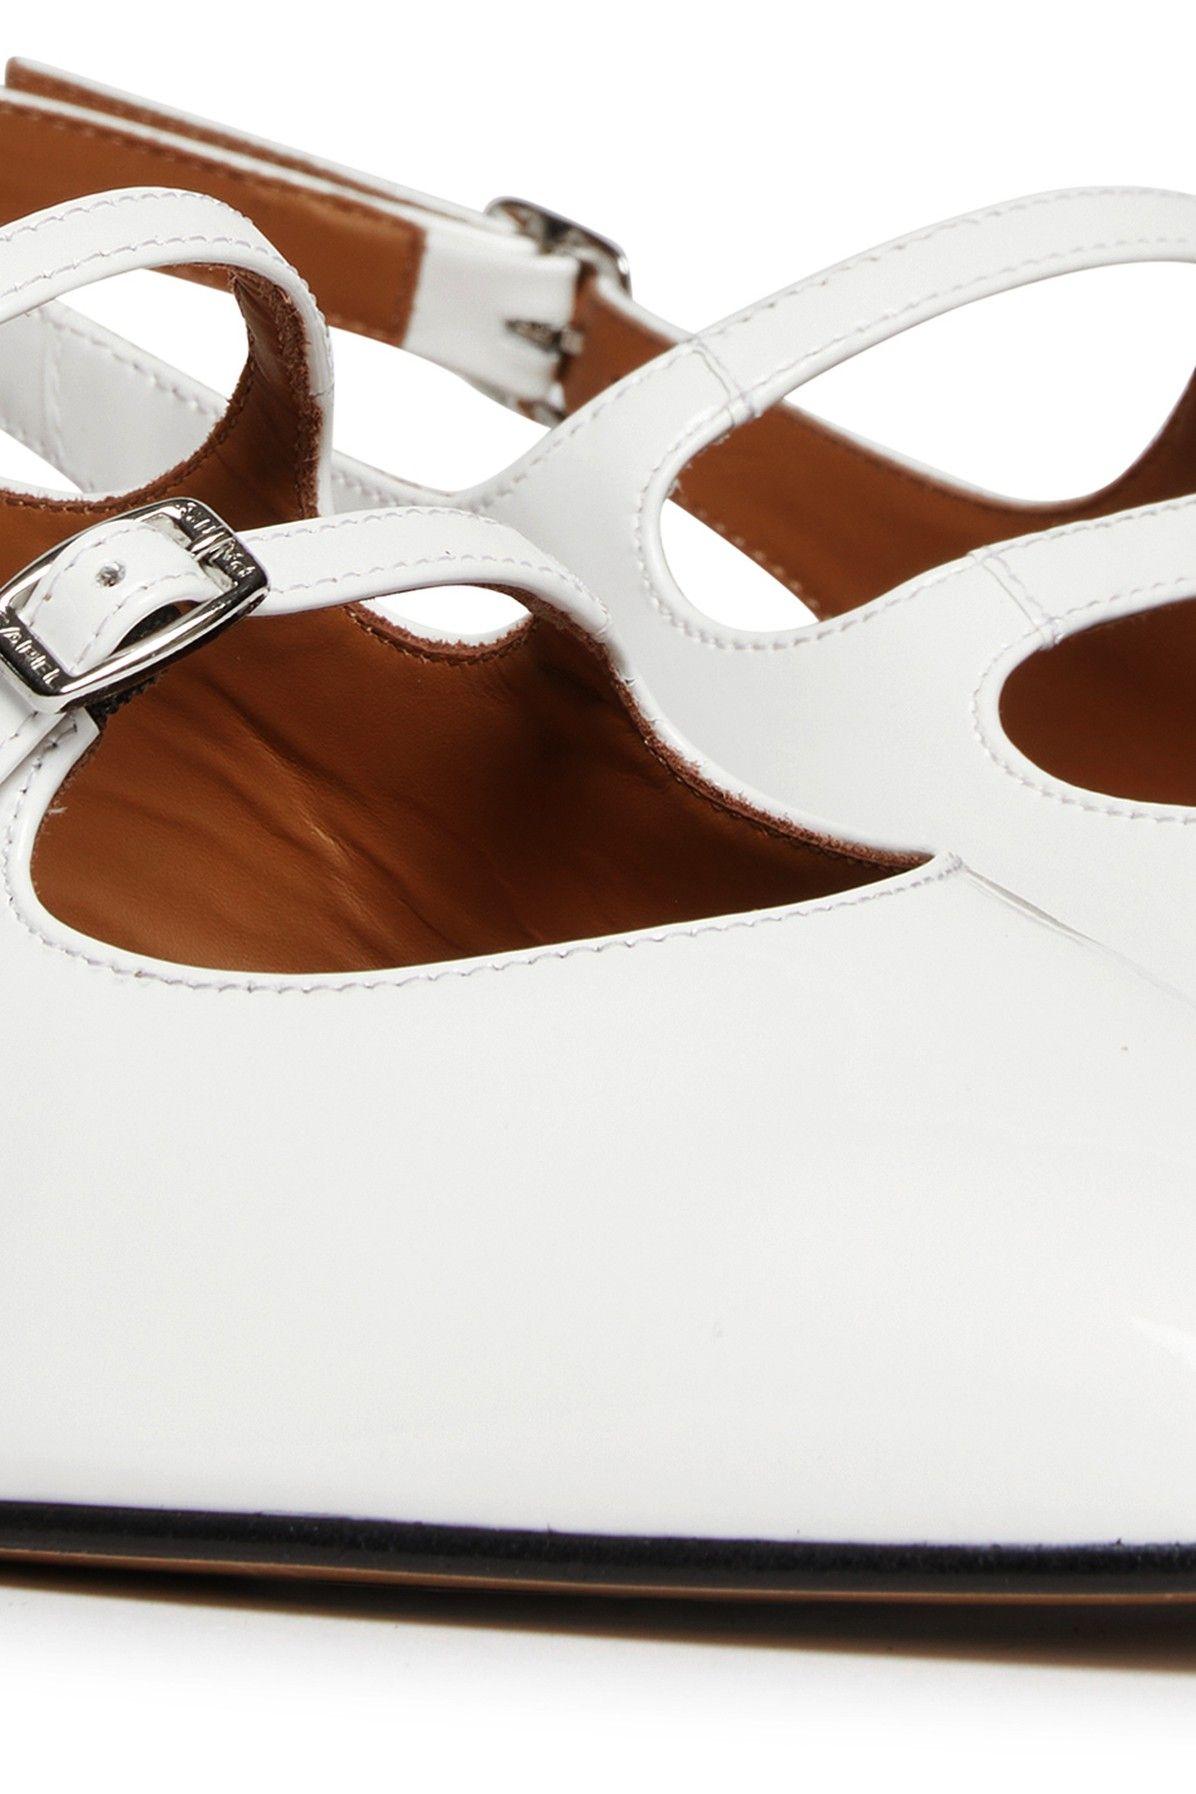 CAREL Peche Sandals in White | Lyst